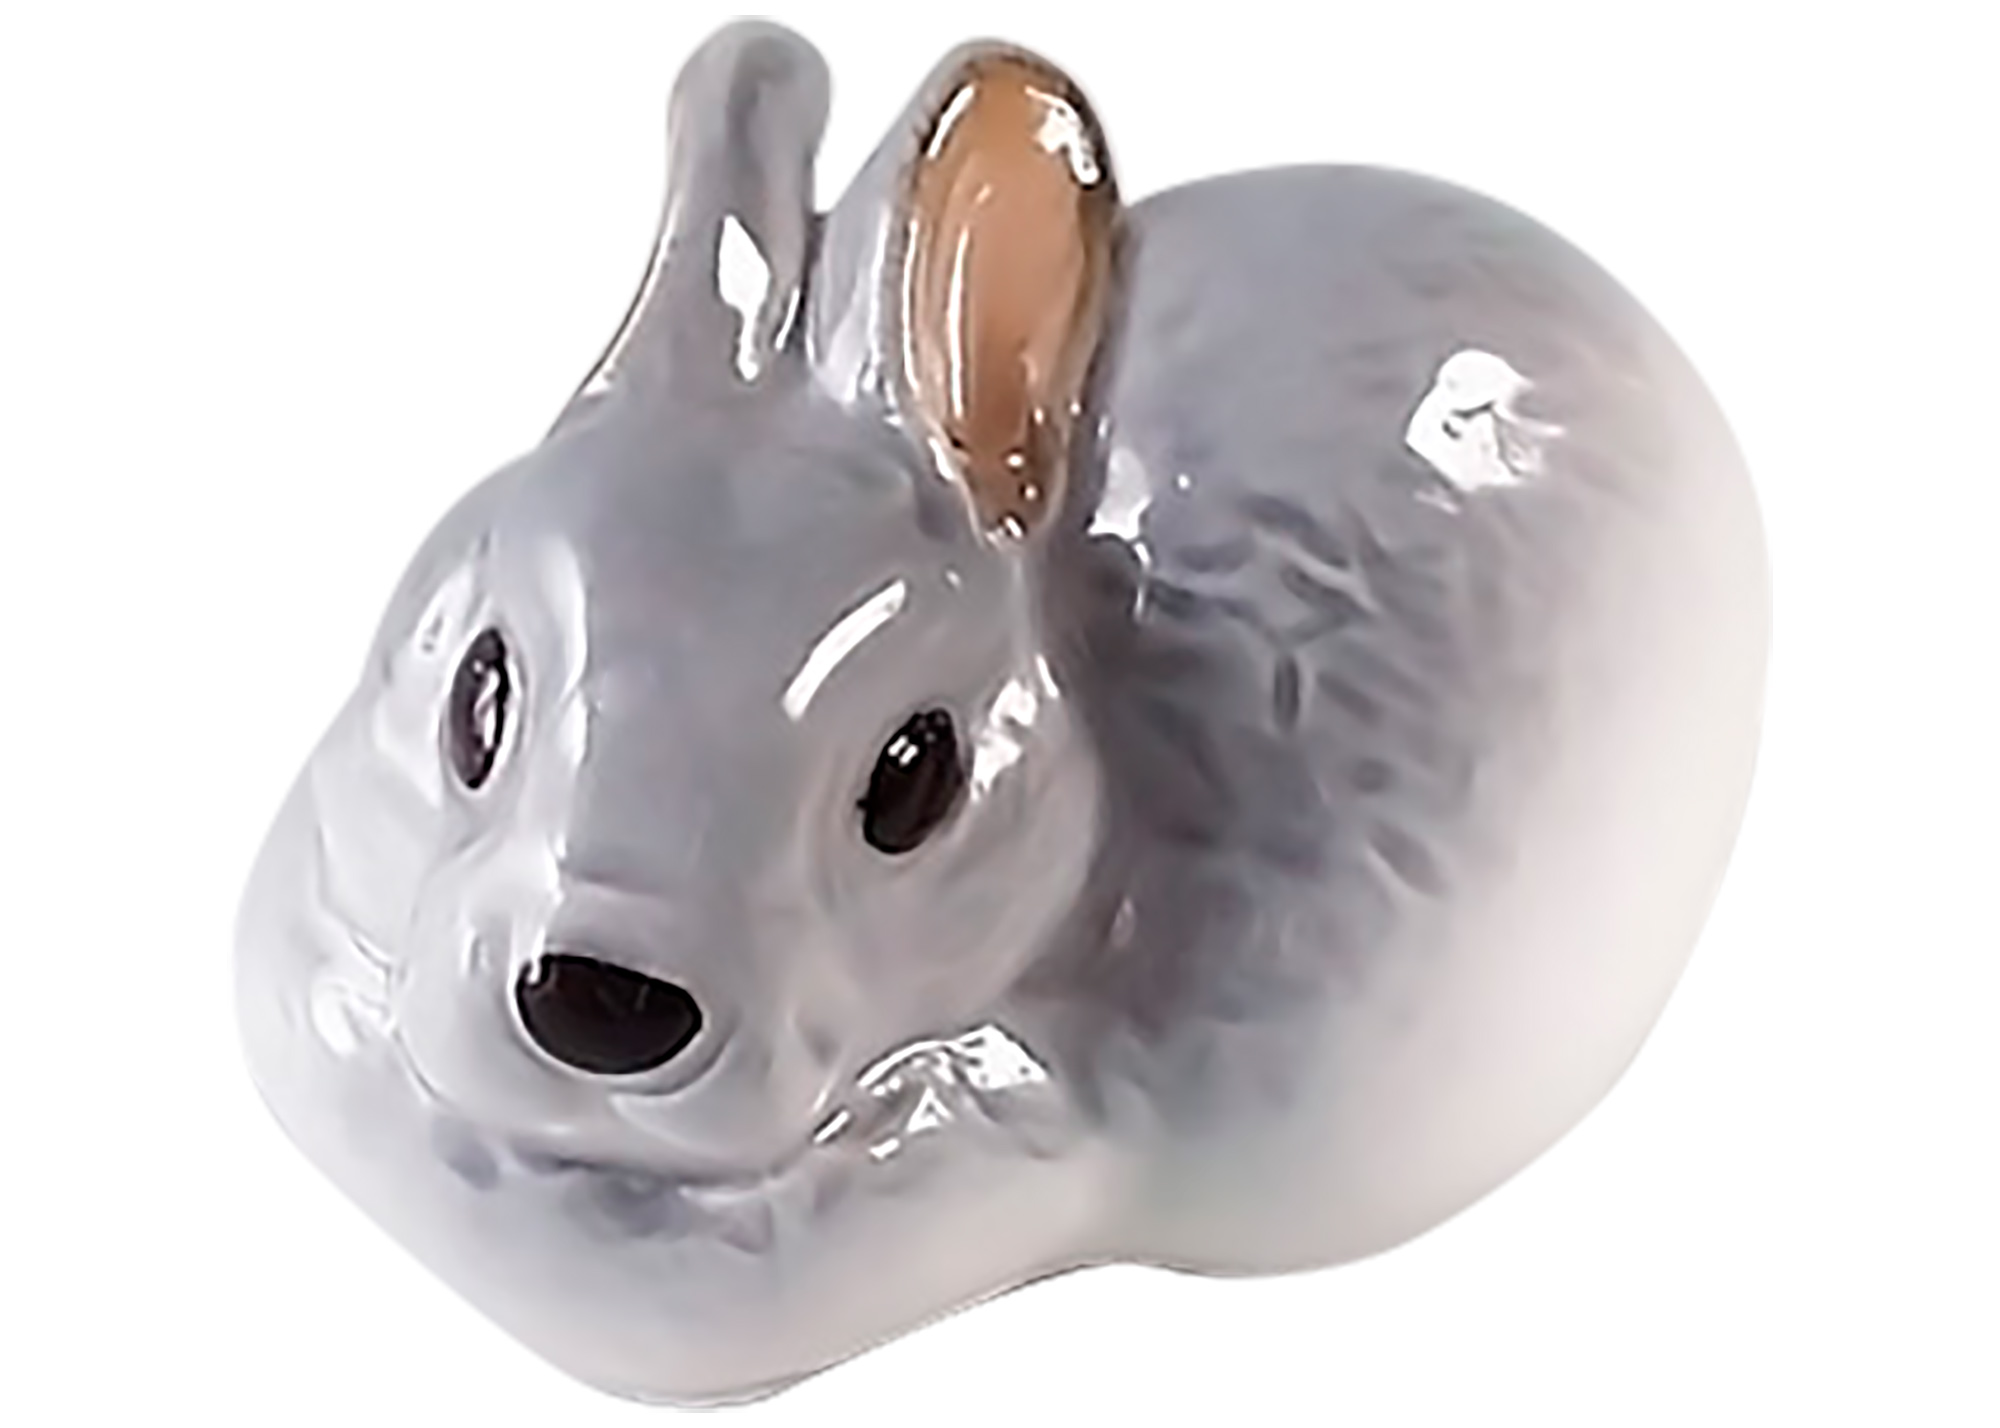 Buy Small Gray Rabbit Figurine at GoldenCockerel.com